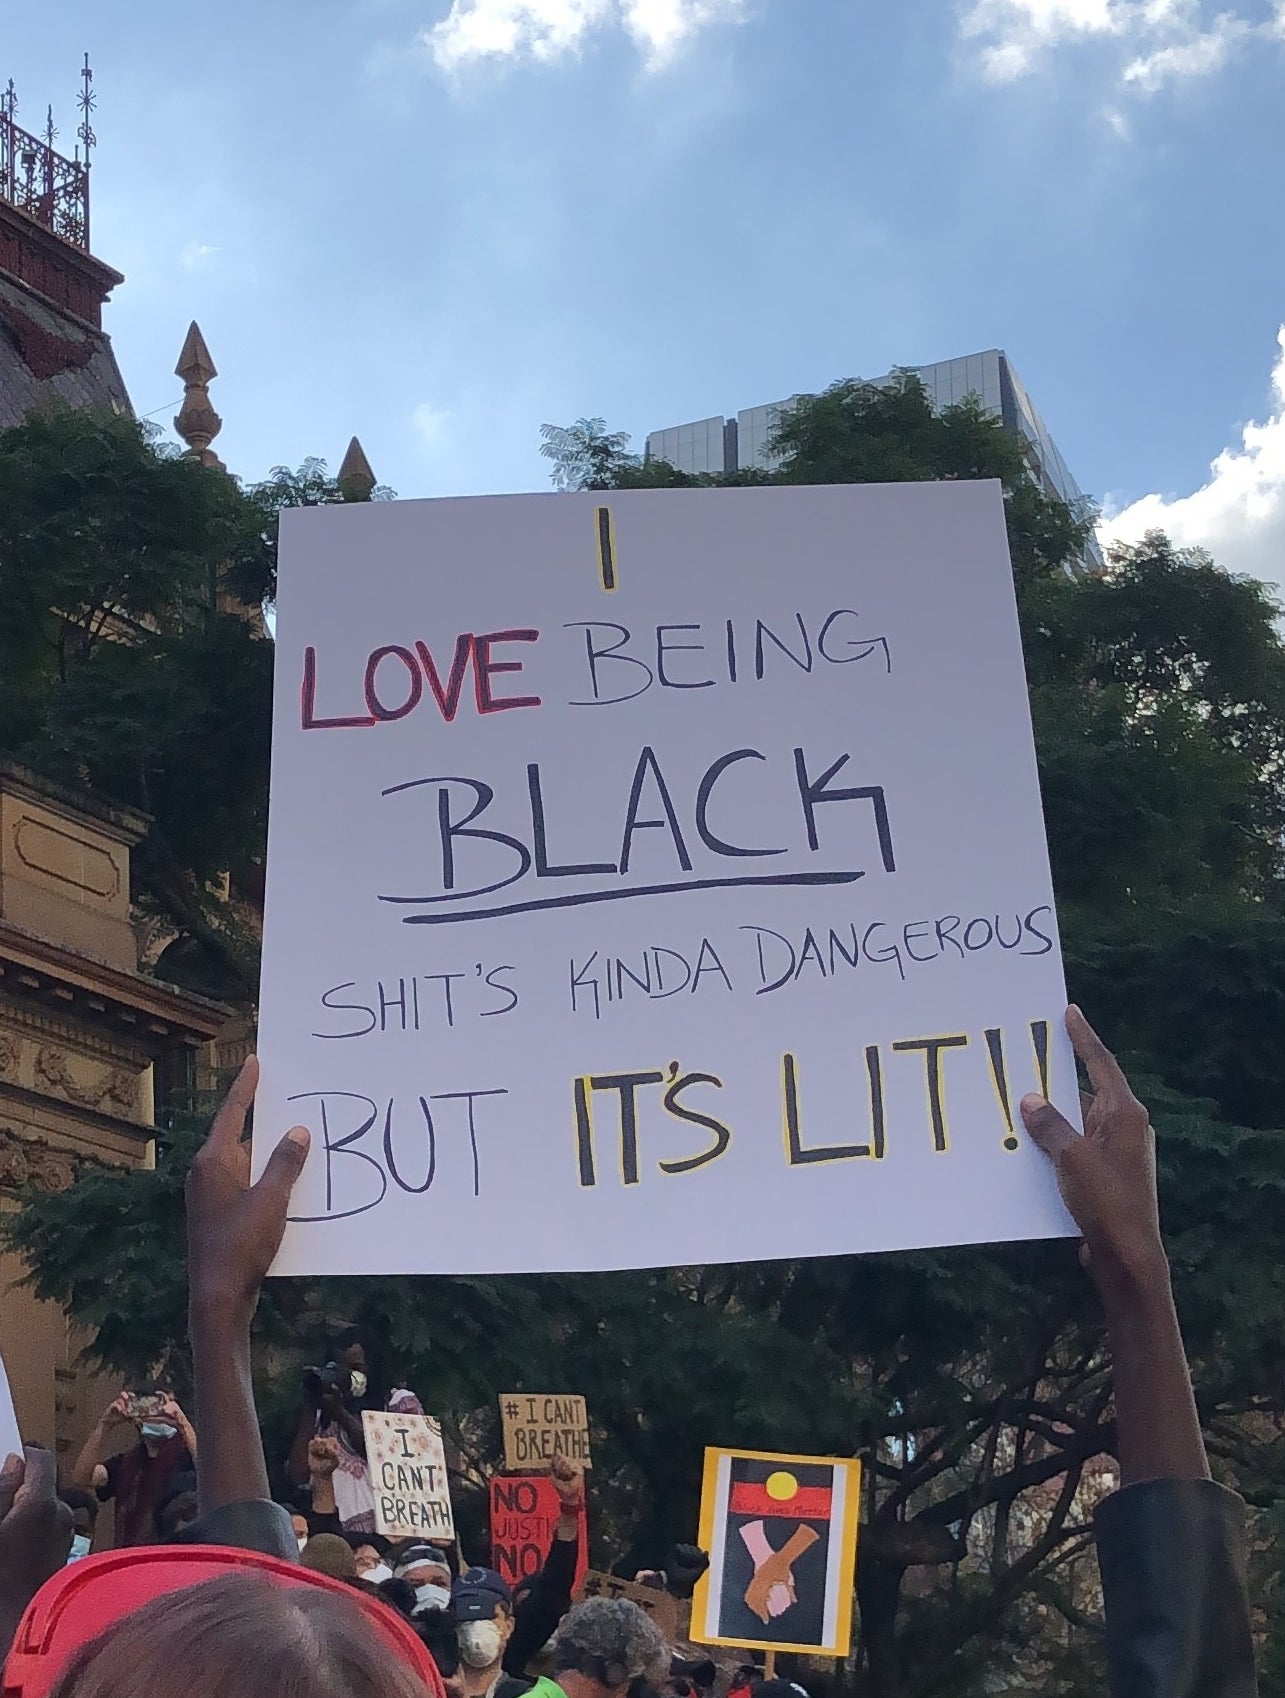 A protest sign reads &quot;I love being black! Shit&#x27;s kinda dangerous, but it&#x27;s lit&quot;.